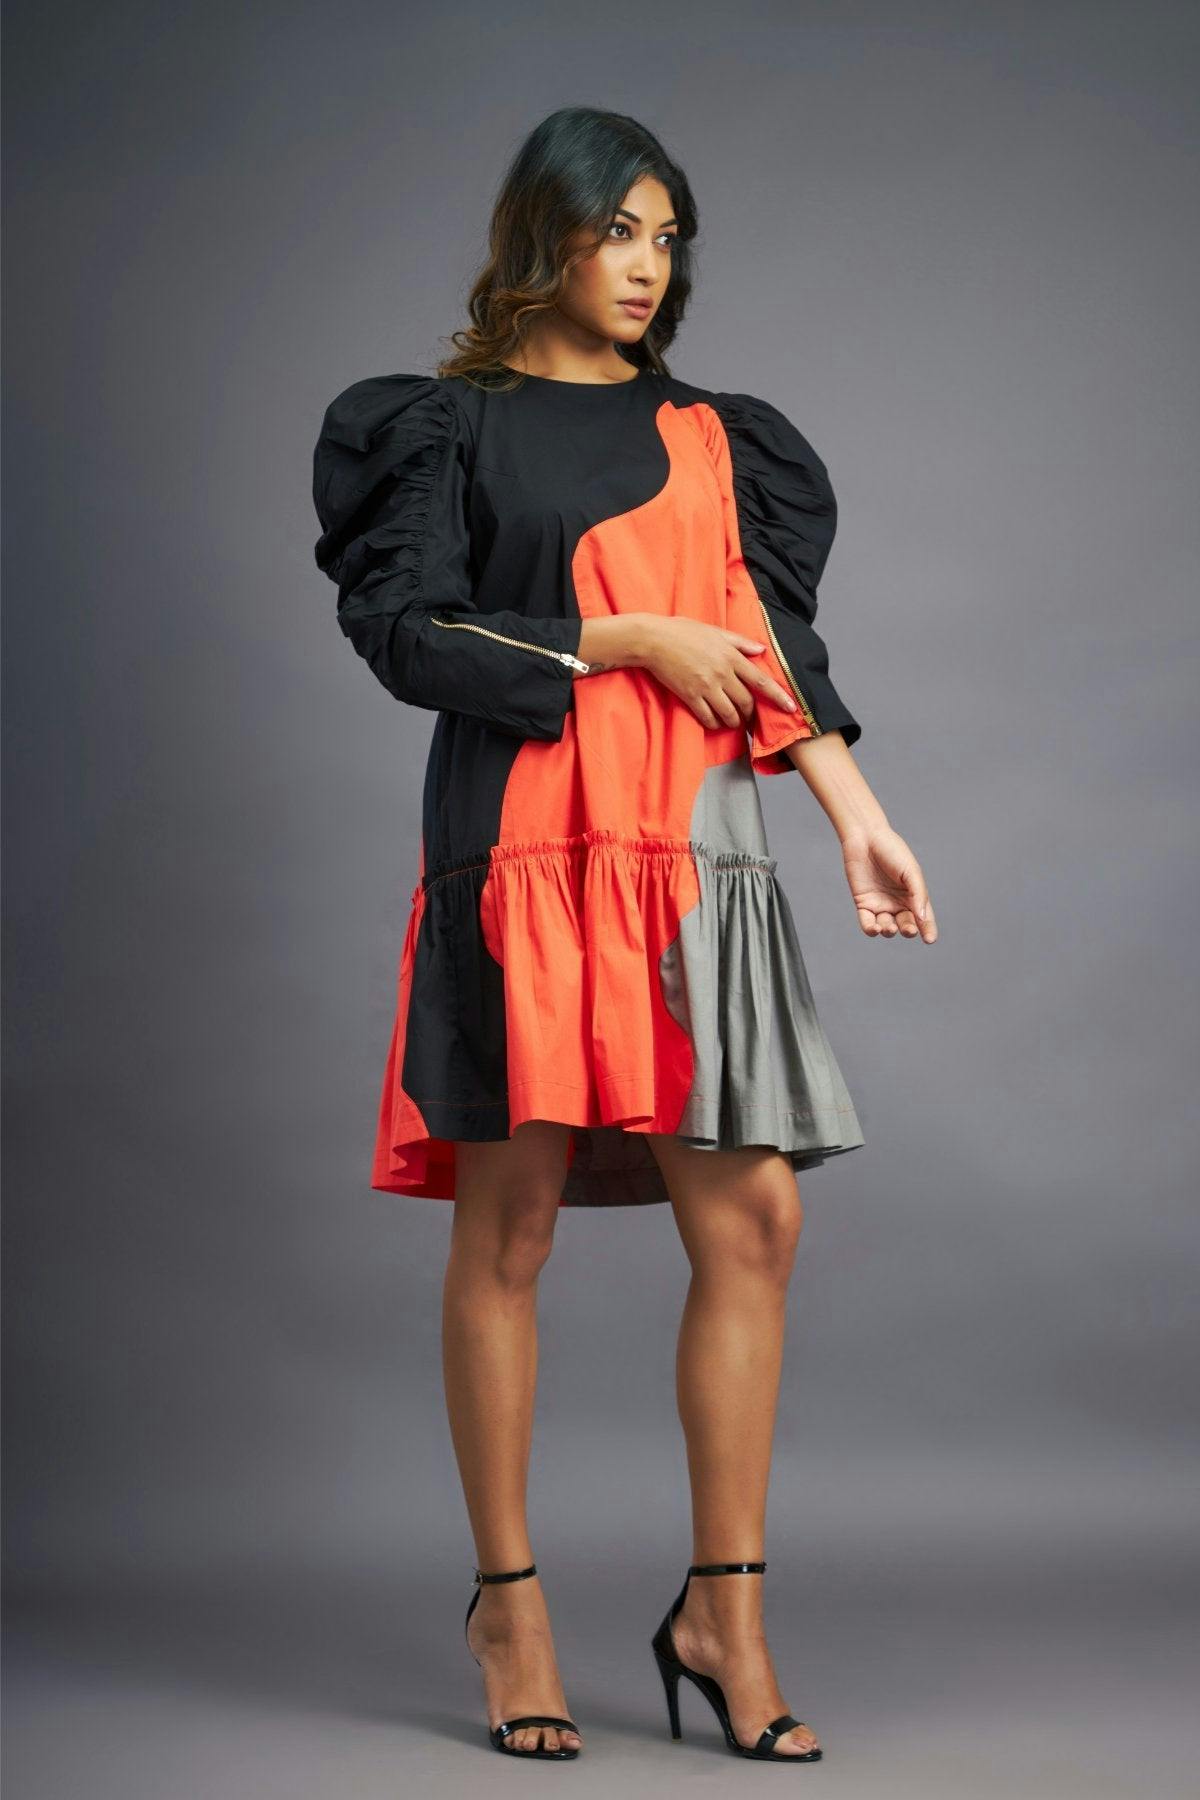 Thumbnail preview #2 for BB-1104-OG - Black Orange Short Dress With Frills